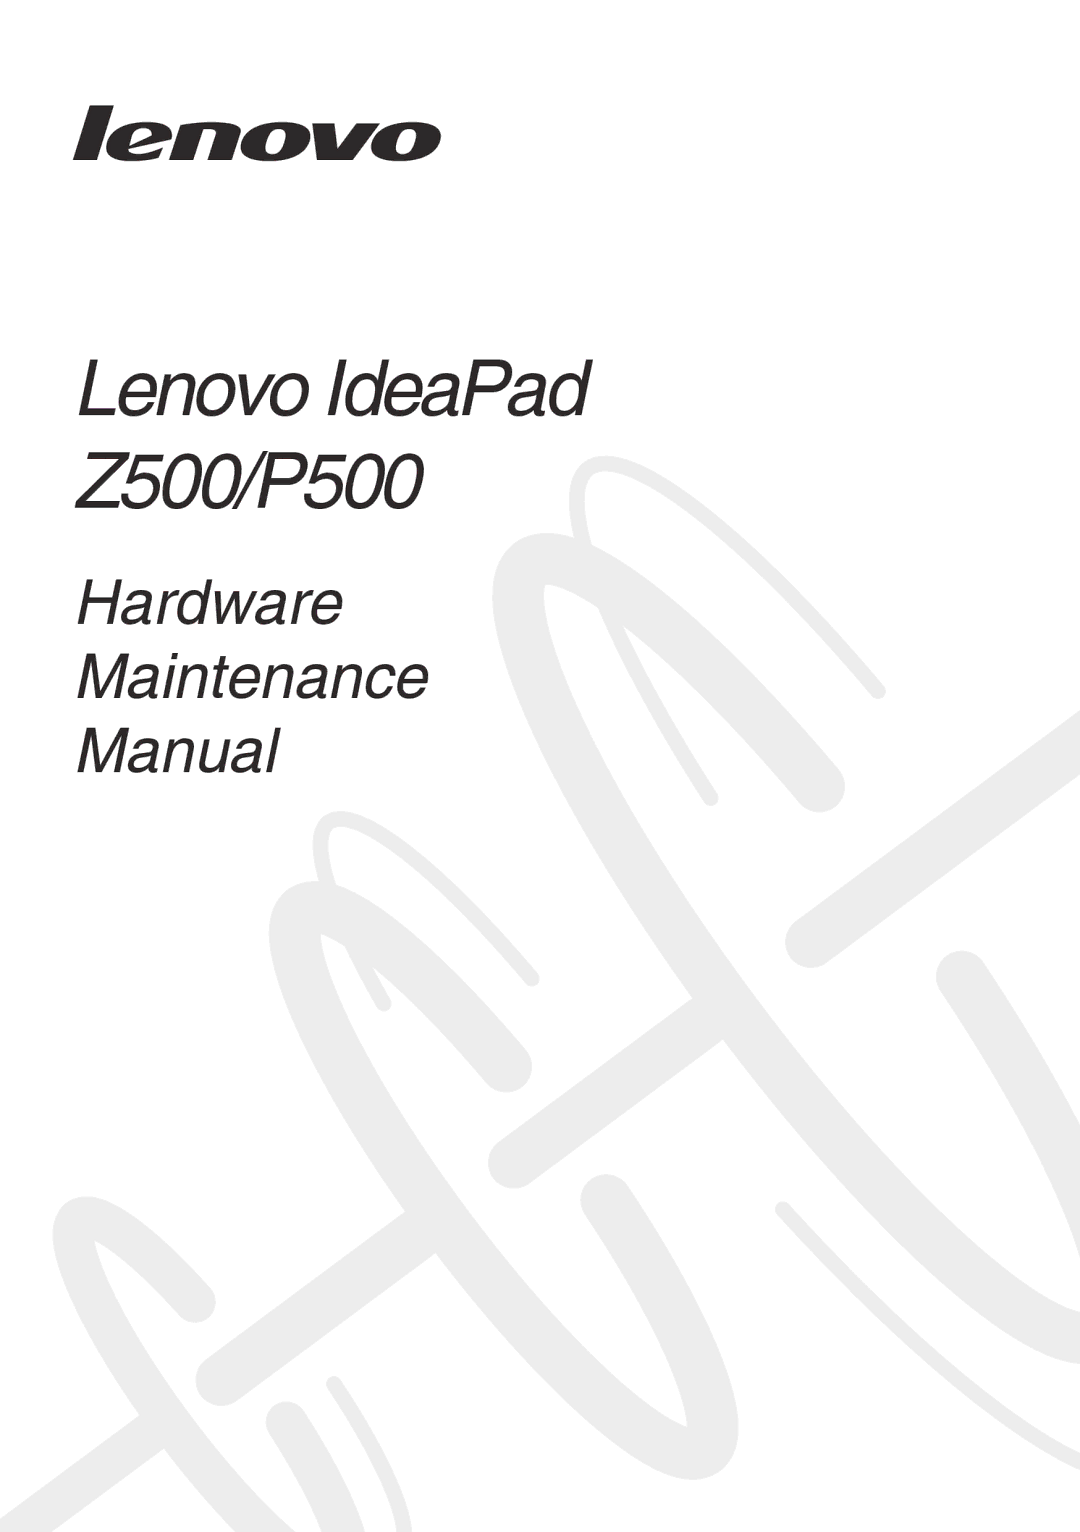 Lenovo manual Lenovo IdeaPad Z500/P500 